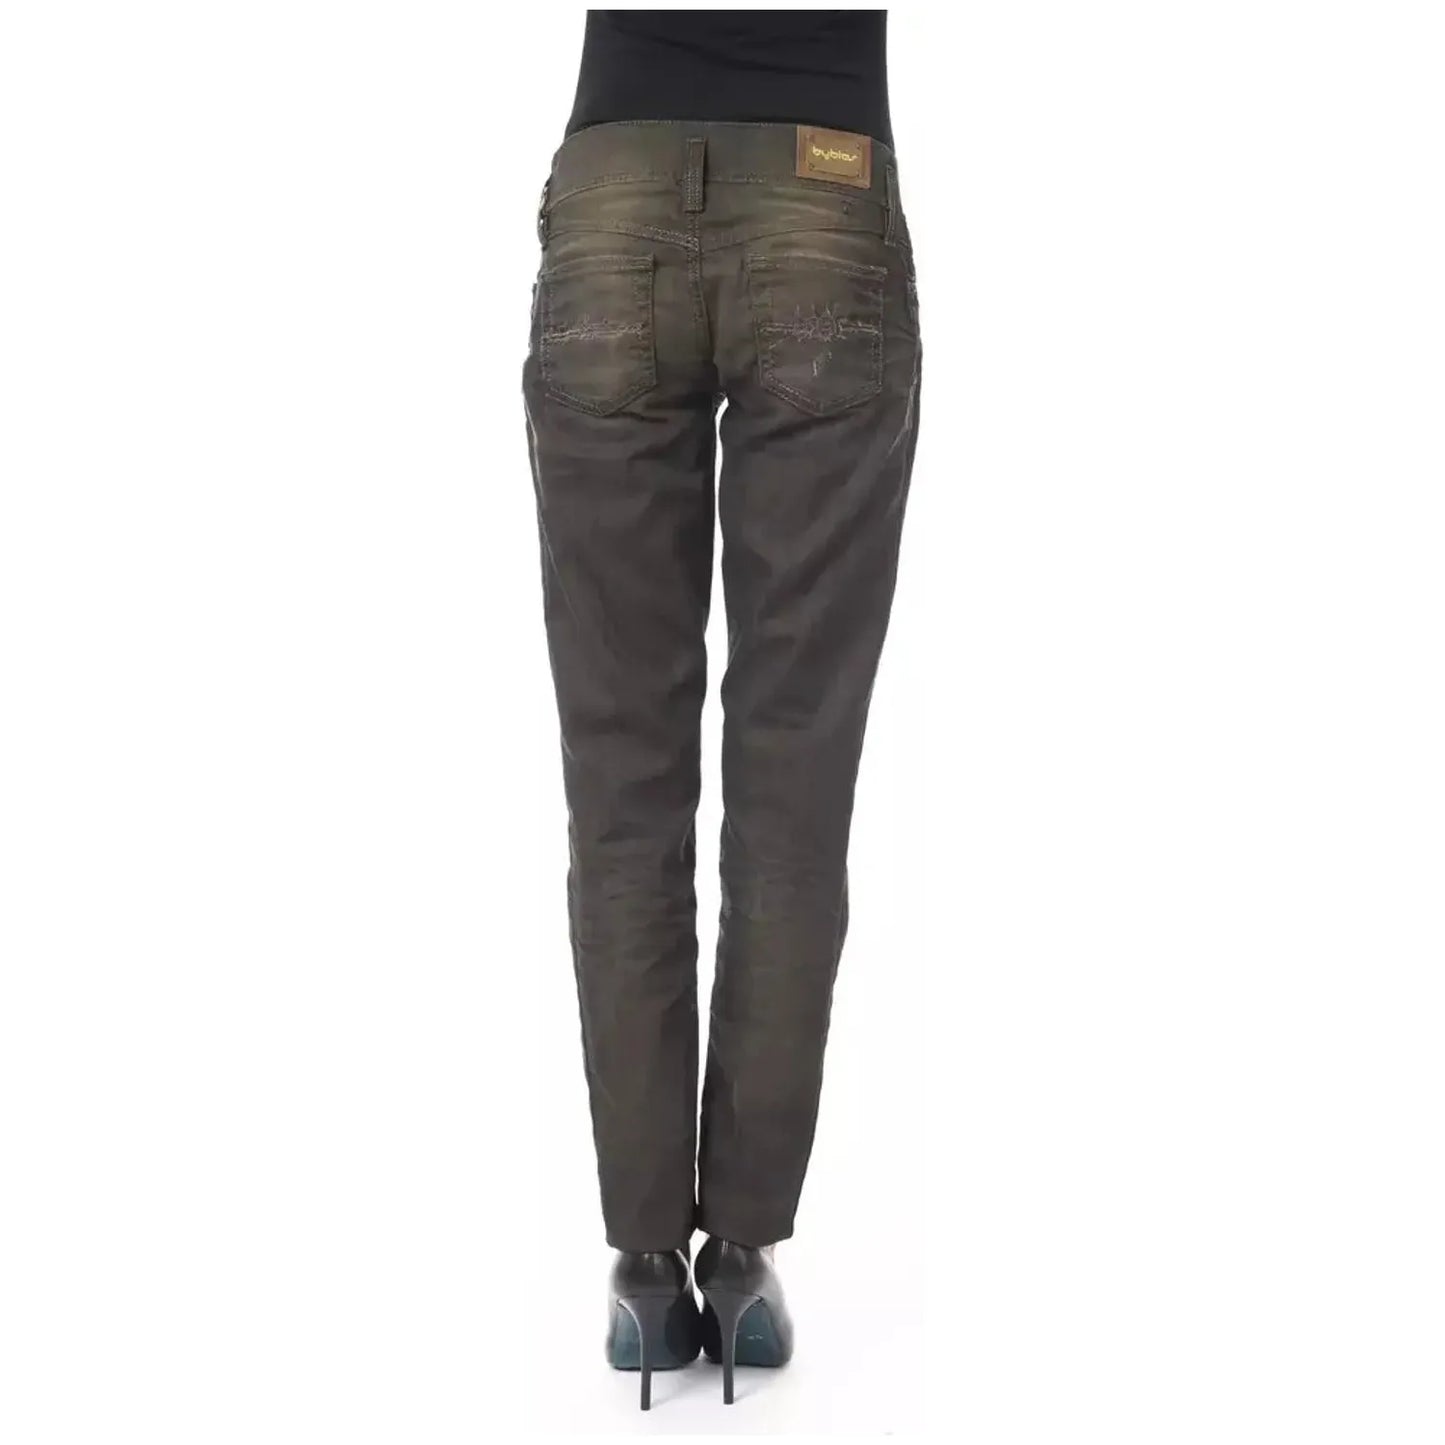 BYBLOS Sleek Black Washed Effect Jeans black-cotton-jeans-pant-17 stock_product_image_17638_1373414645-16-3b7c0175-1d2.webp